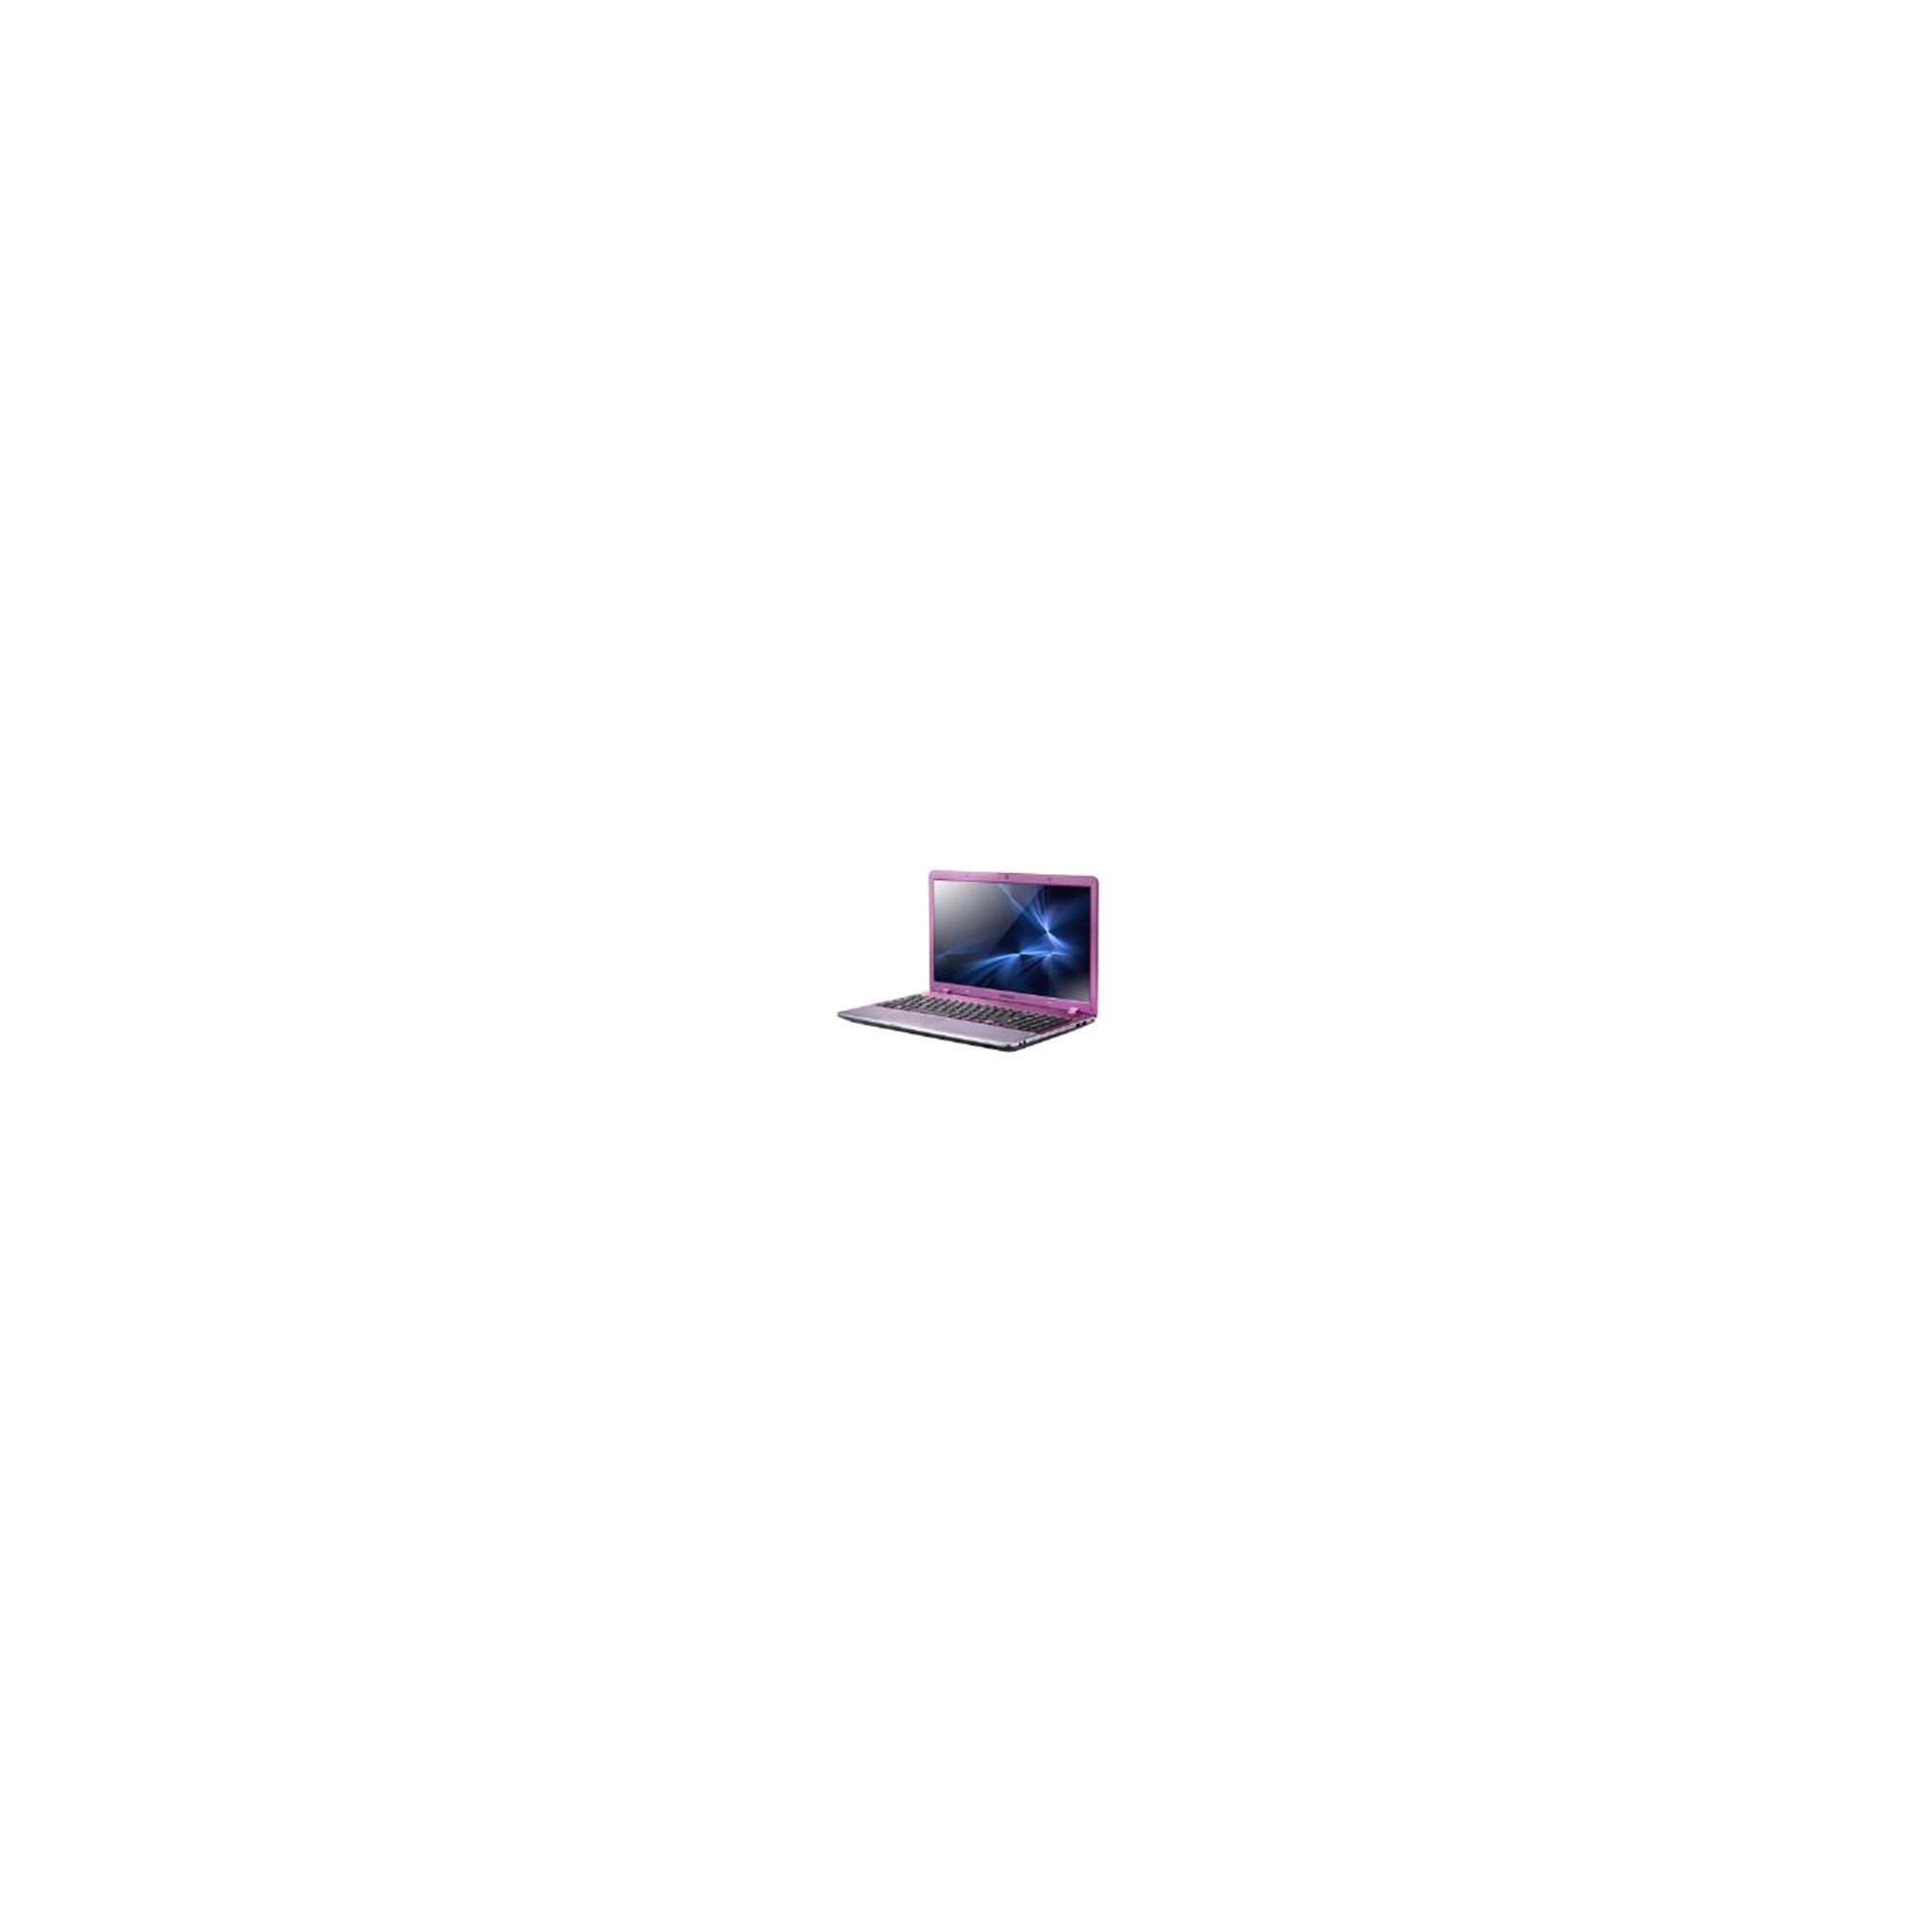 Samsung Series 3 350V (15.6 inch) Notebook Pentium (B970) 2.3GHz 6GB 500GB SuperMulti DL WLAN Webcam Windows 8 64-bit (HD Graphics) Pink at Tesco Direct